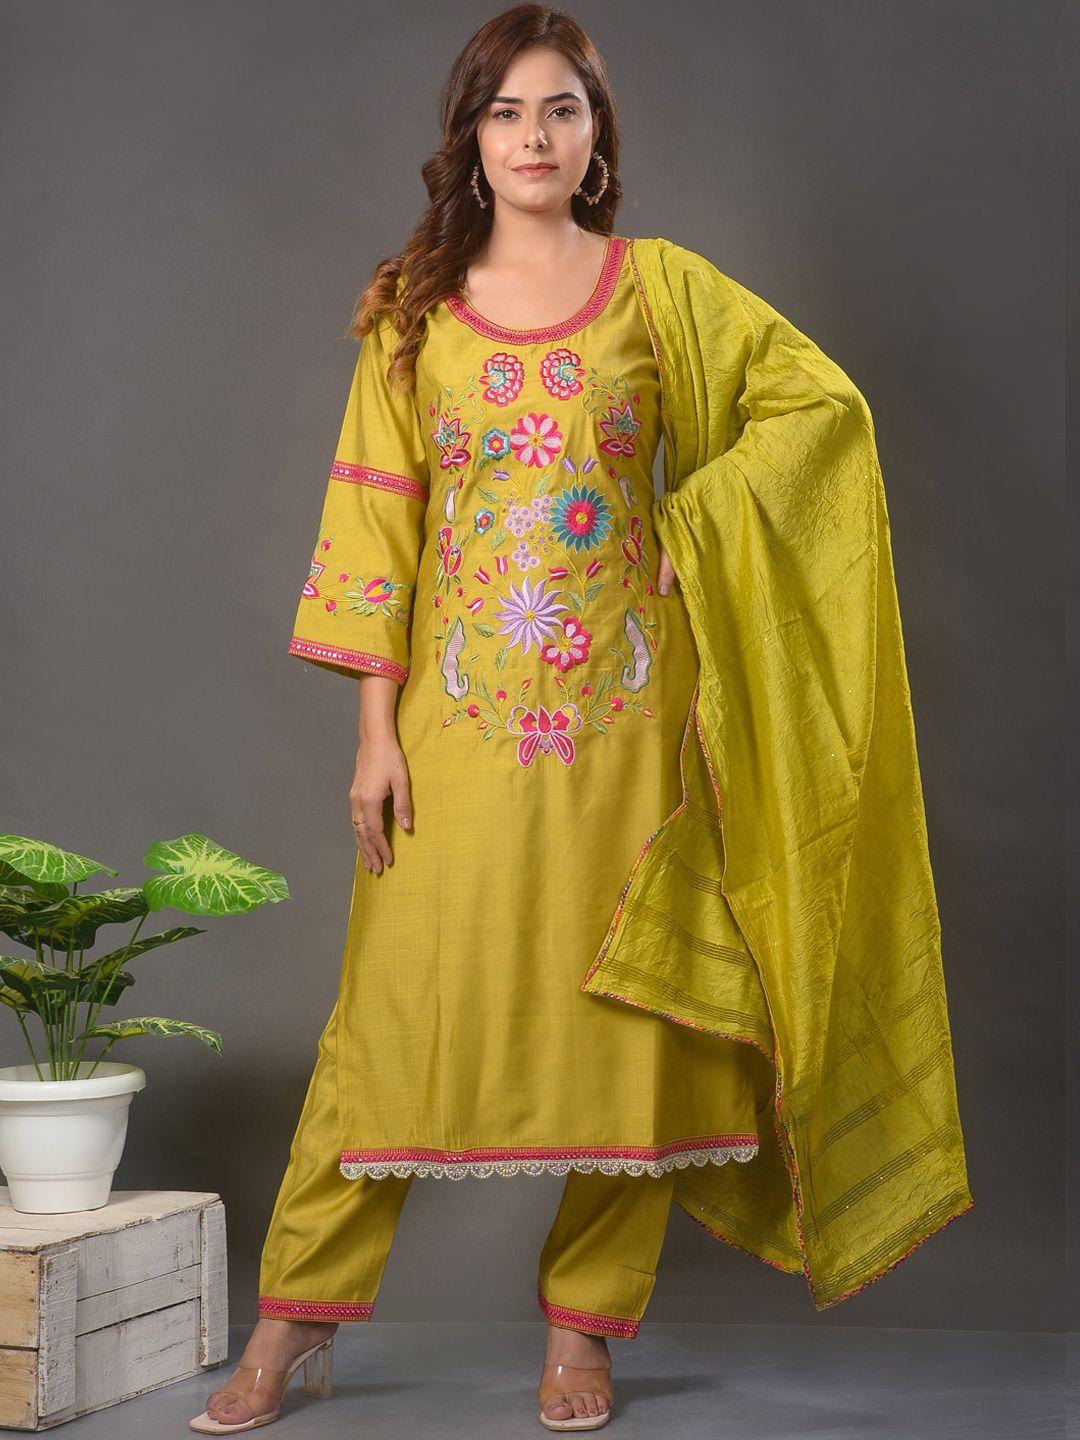 clora creation women mustard yellow floral embroidered regular kurta with palazzos & with dupatta